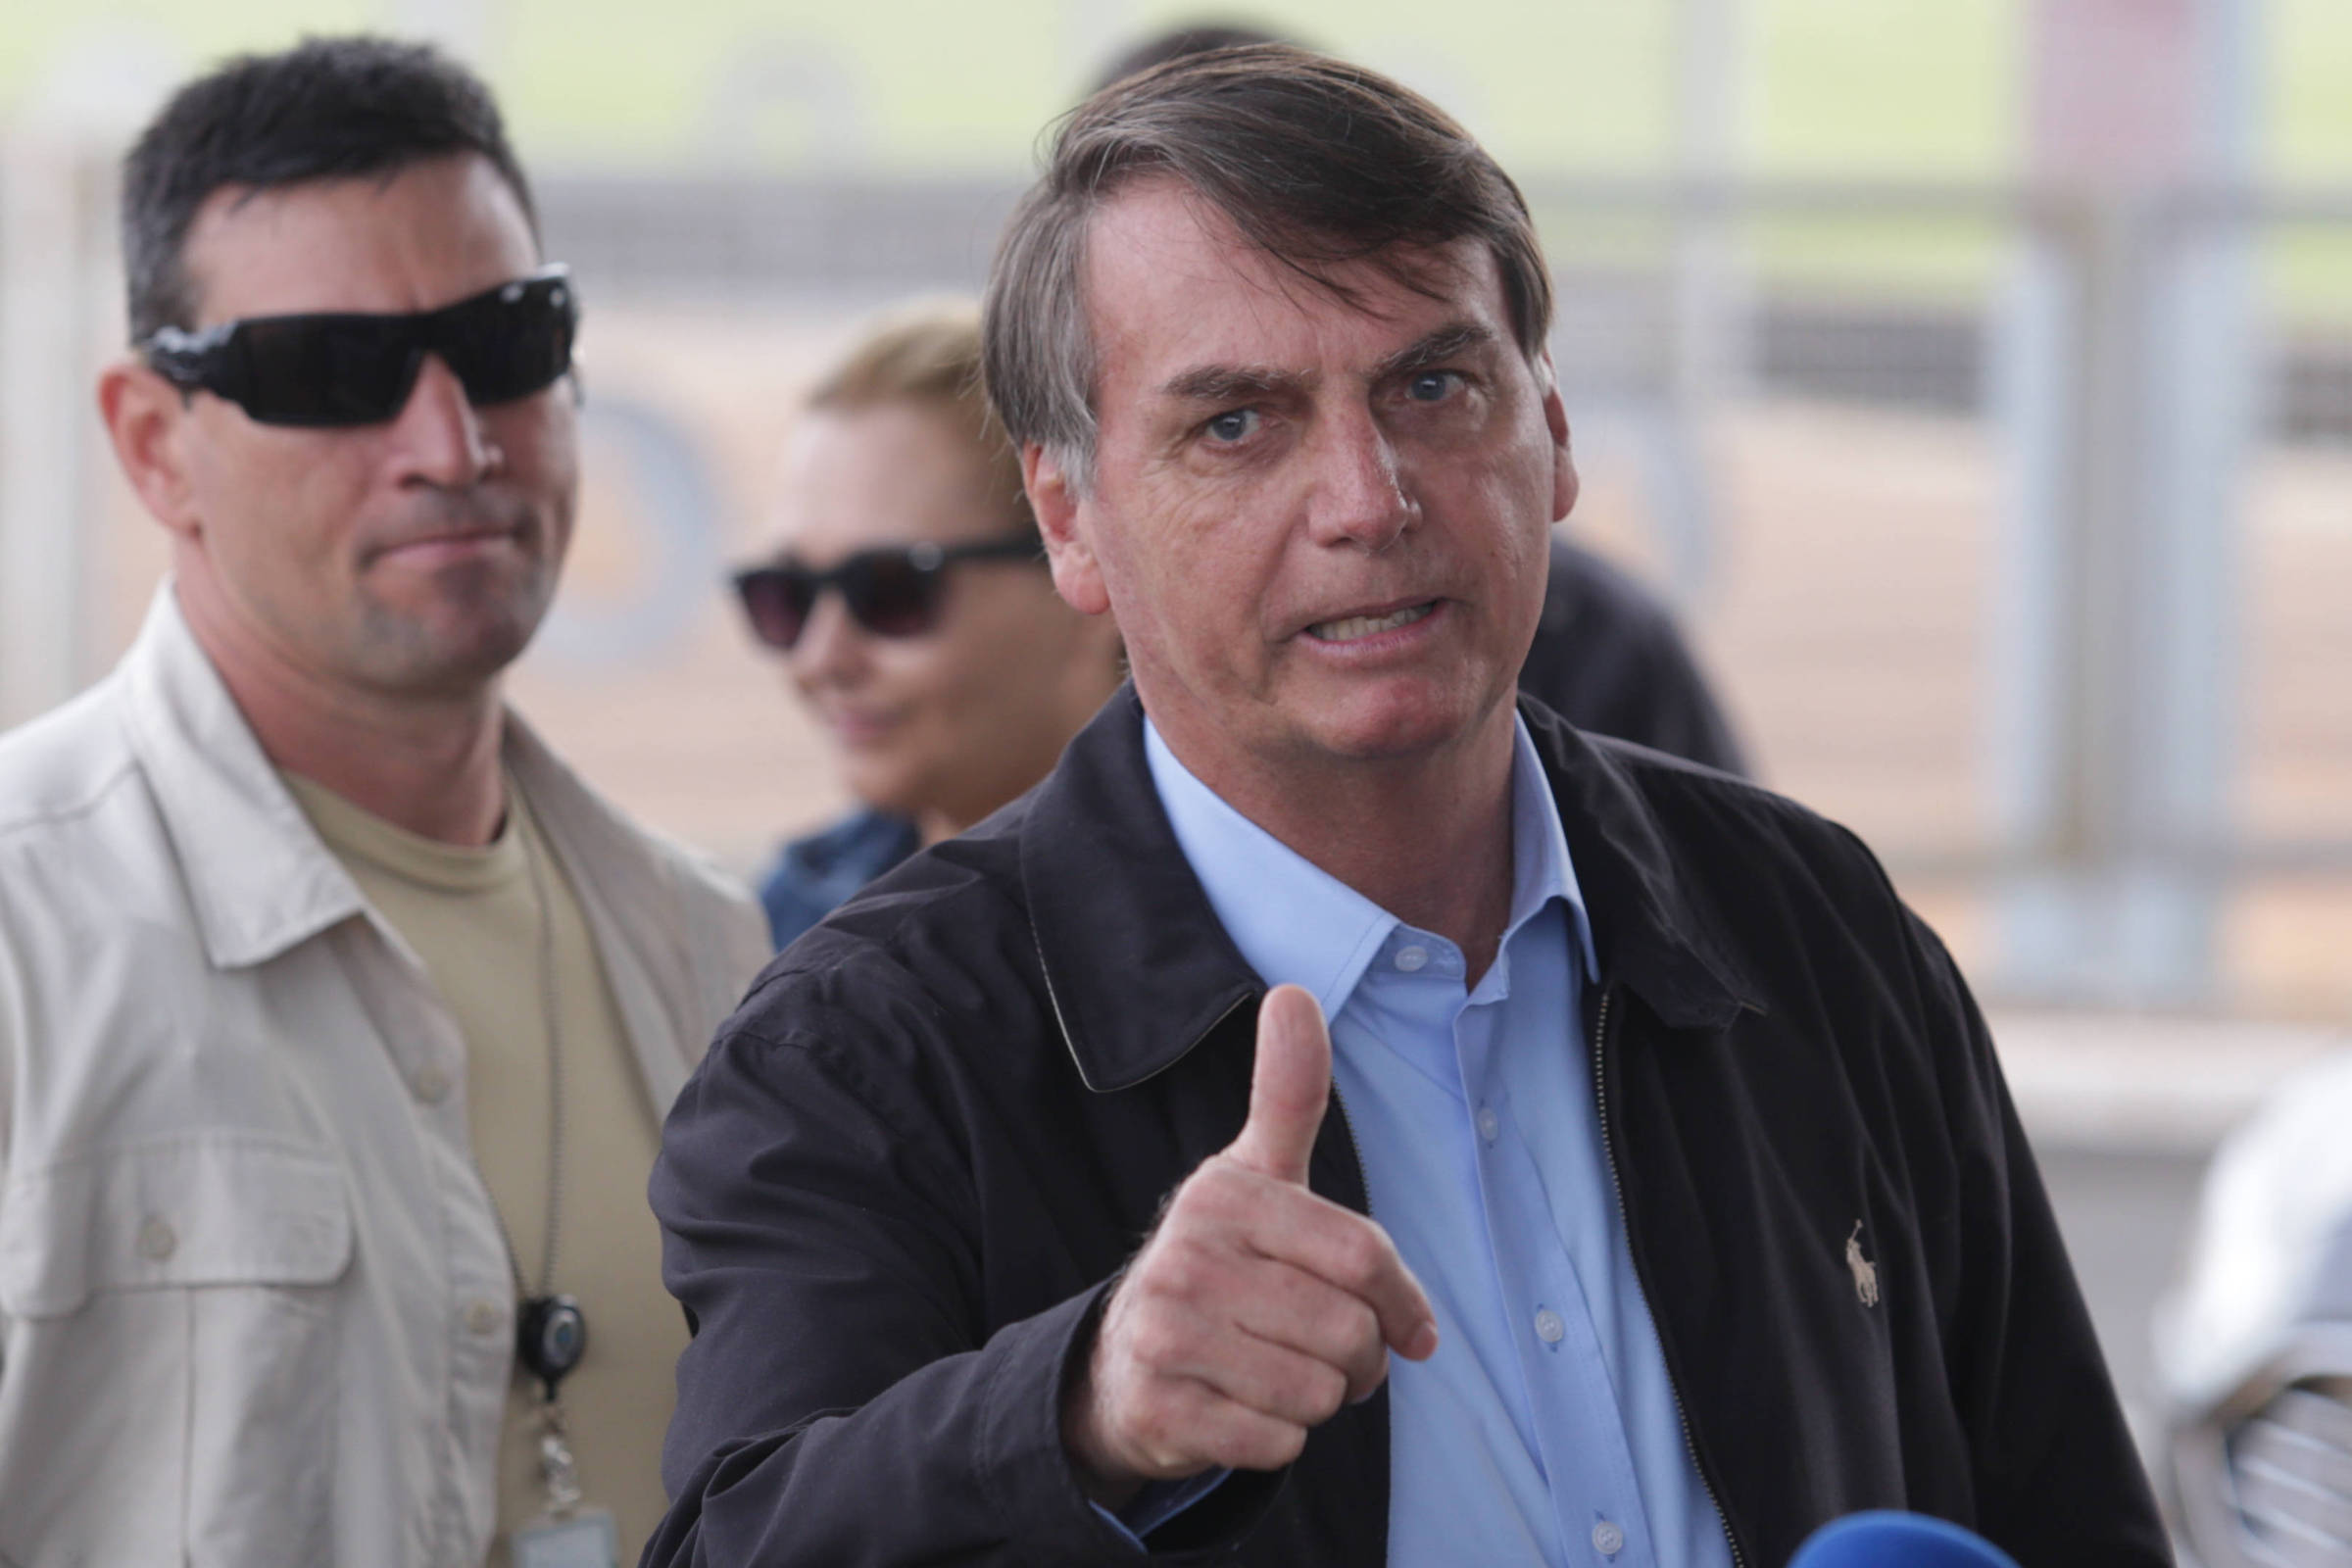 Presidente Bolsonaro virá ao Guarujá para descanso com a filha